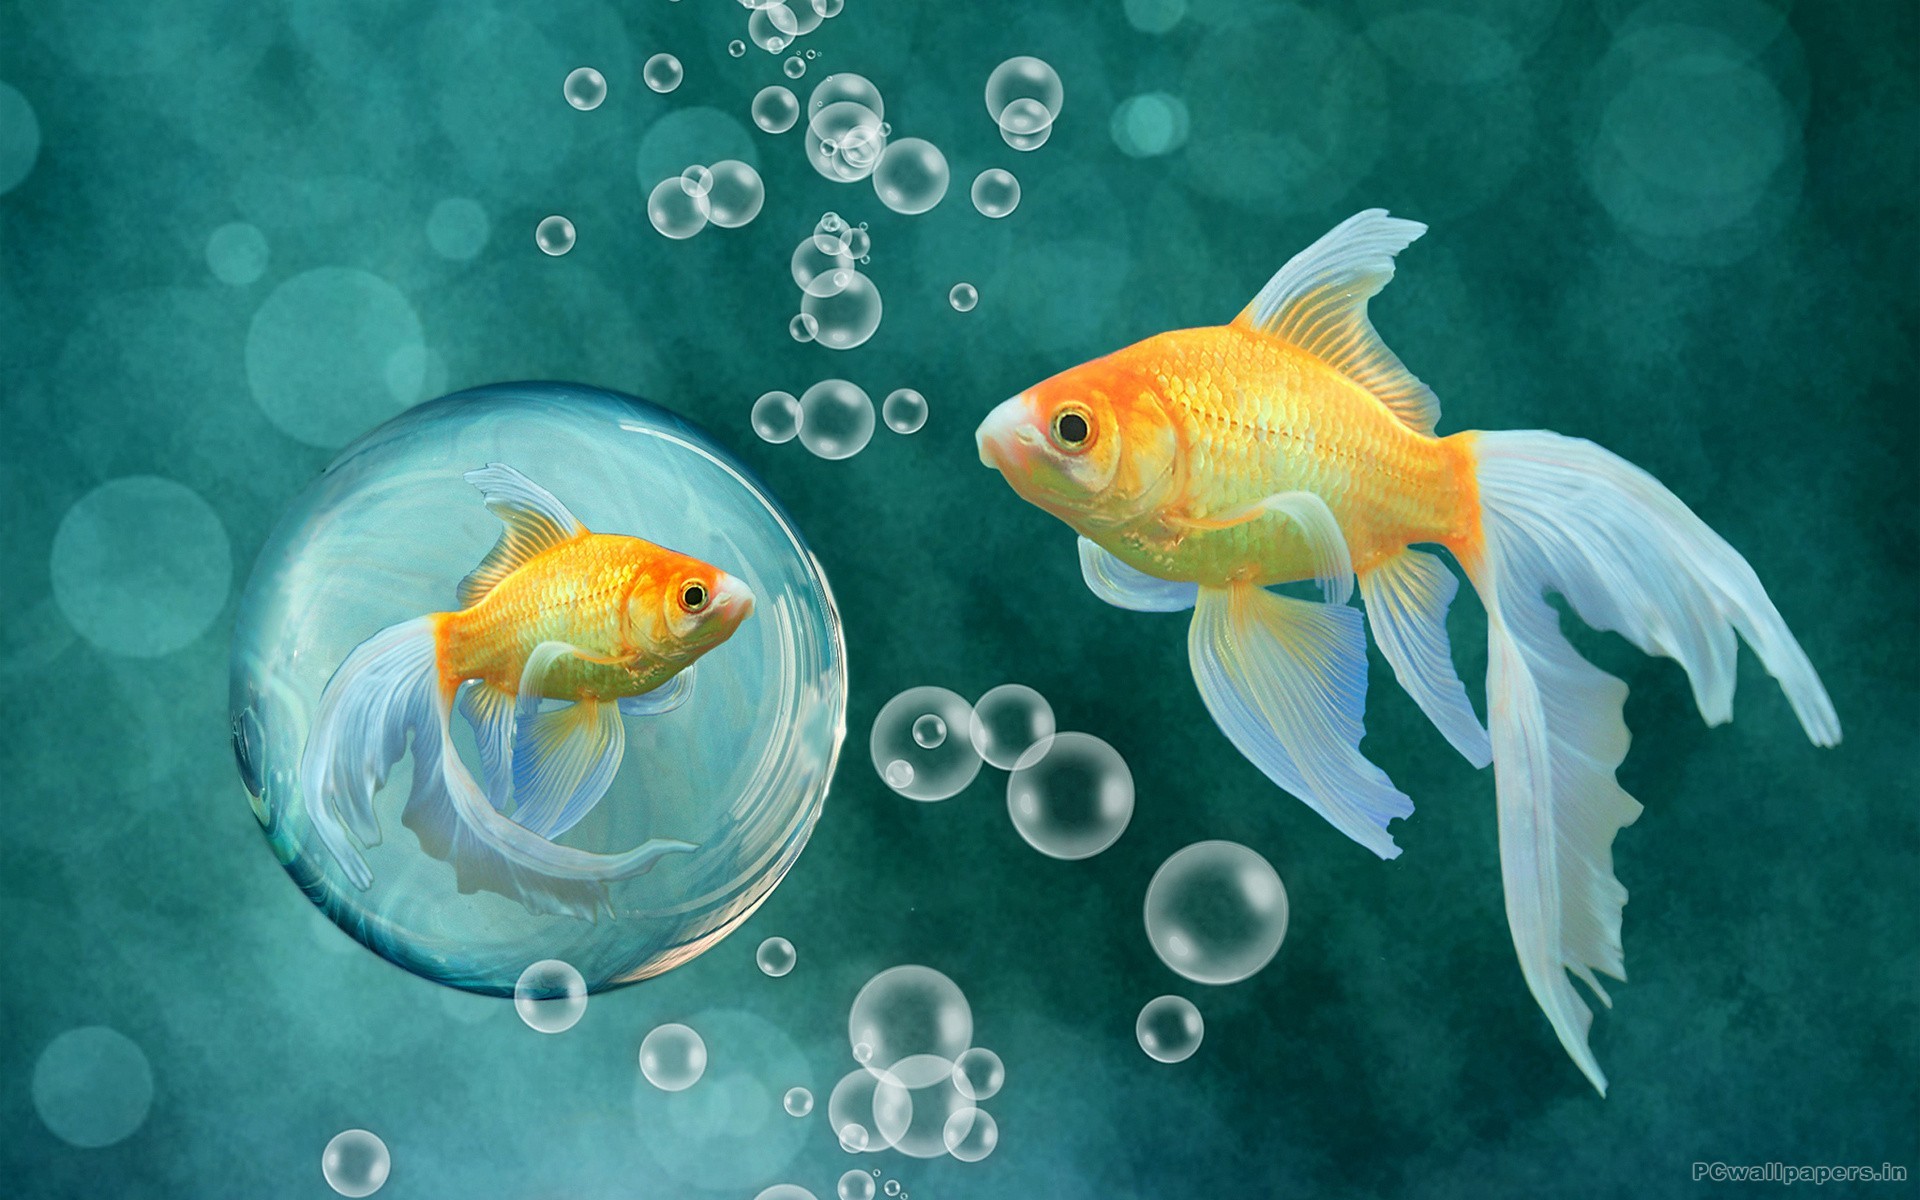 Koi Fish Live Wallpaper Fish – Applications sur Google Play